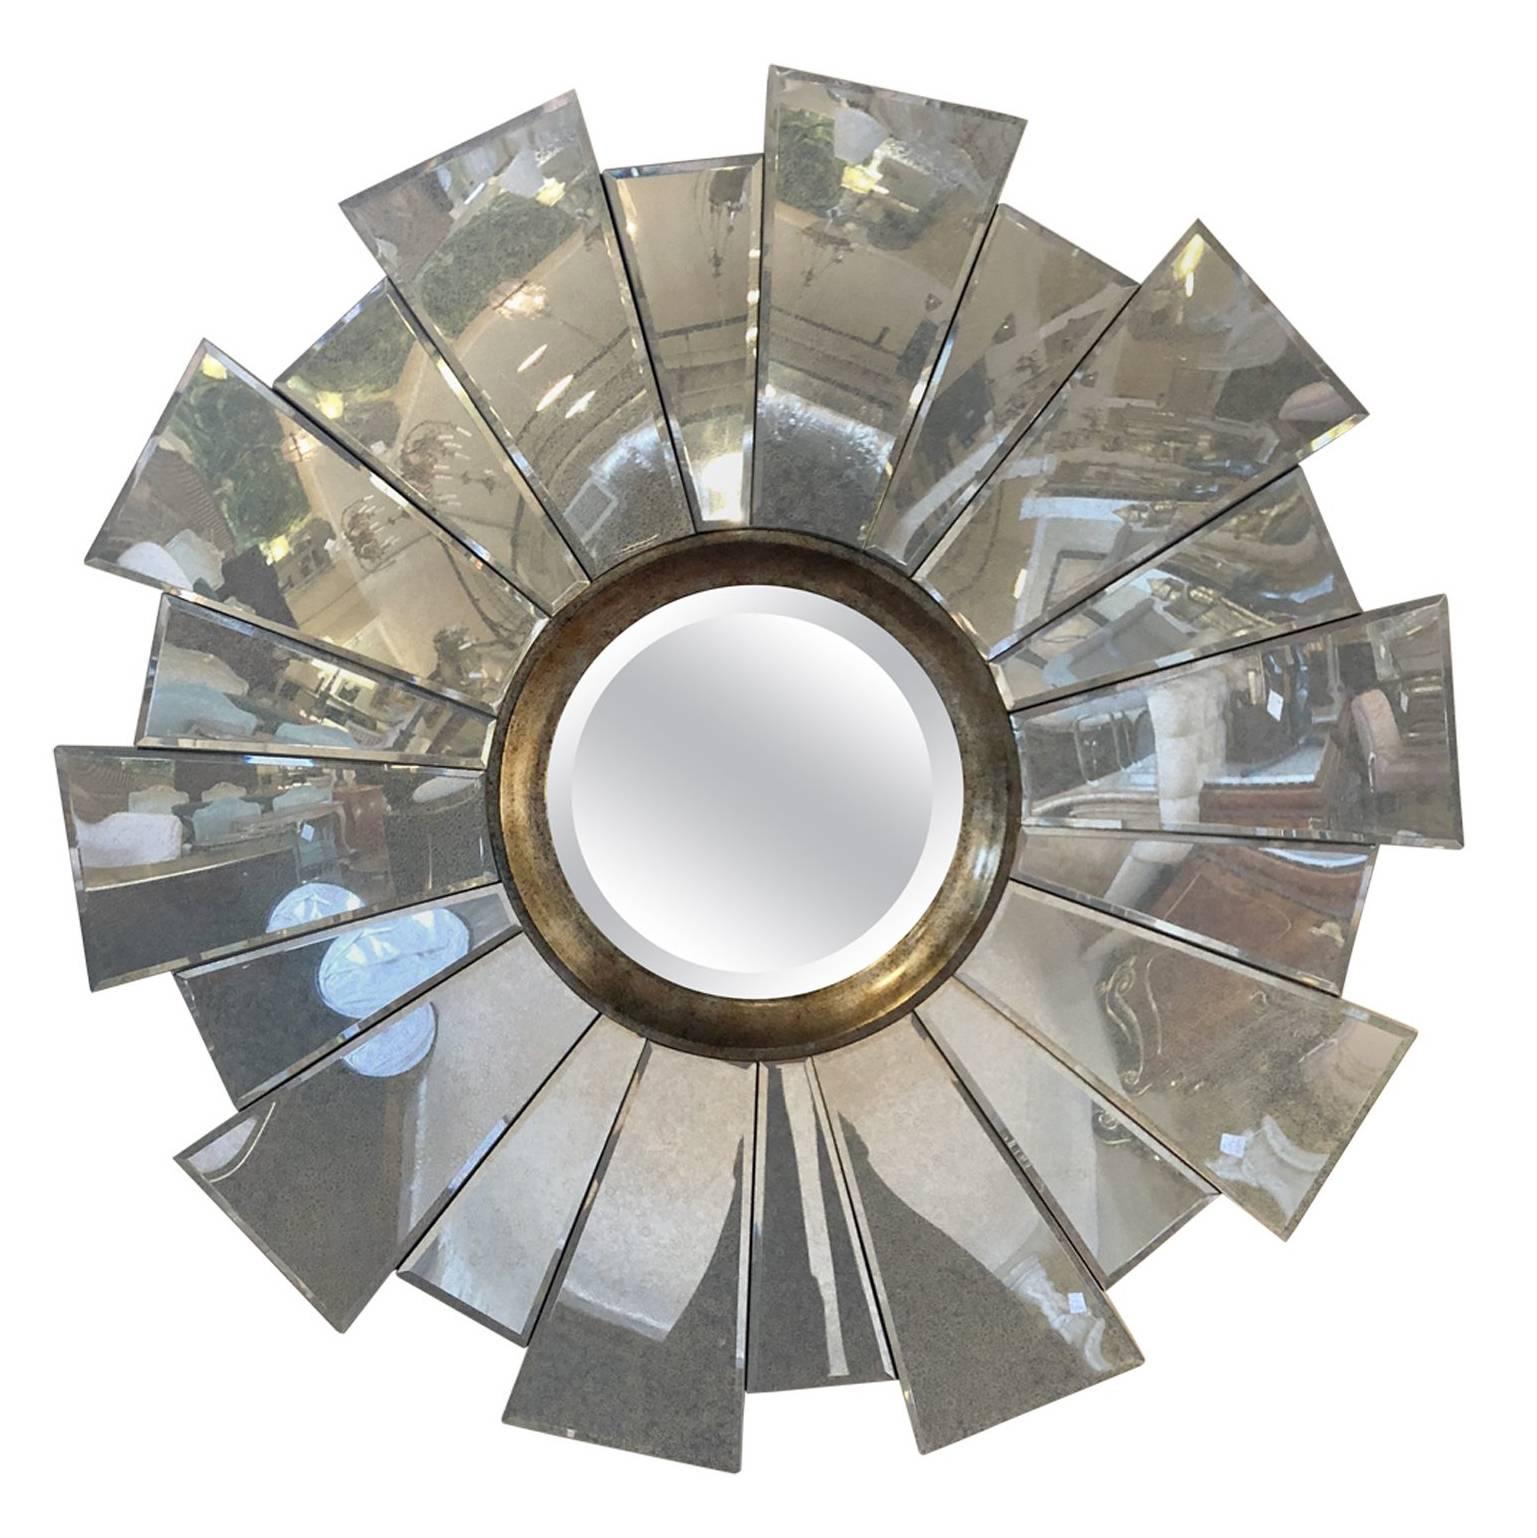  Contemporary Beveled Circular Mirror in a Mirrored Sunburst Frame